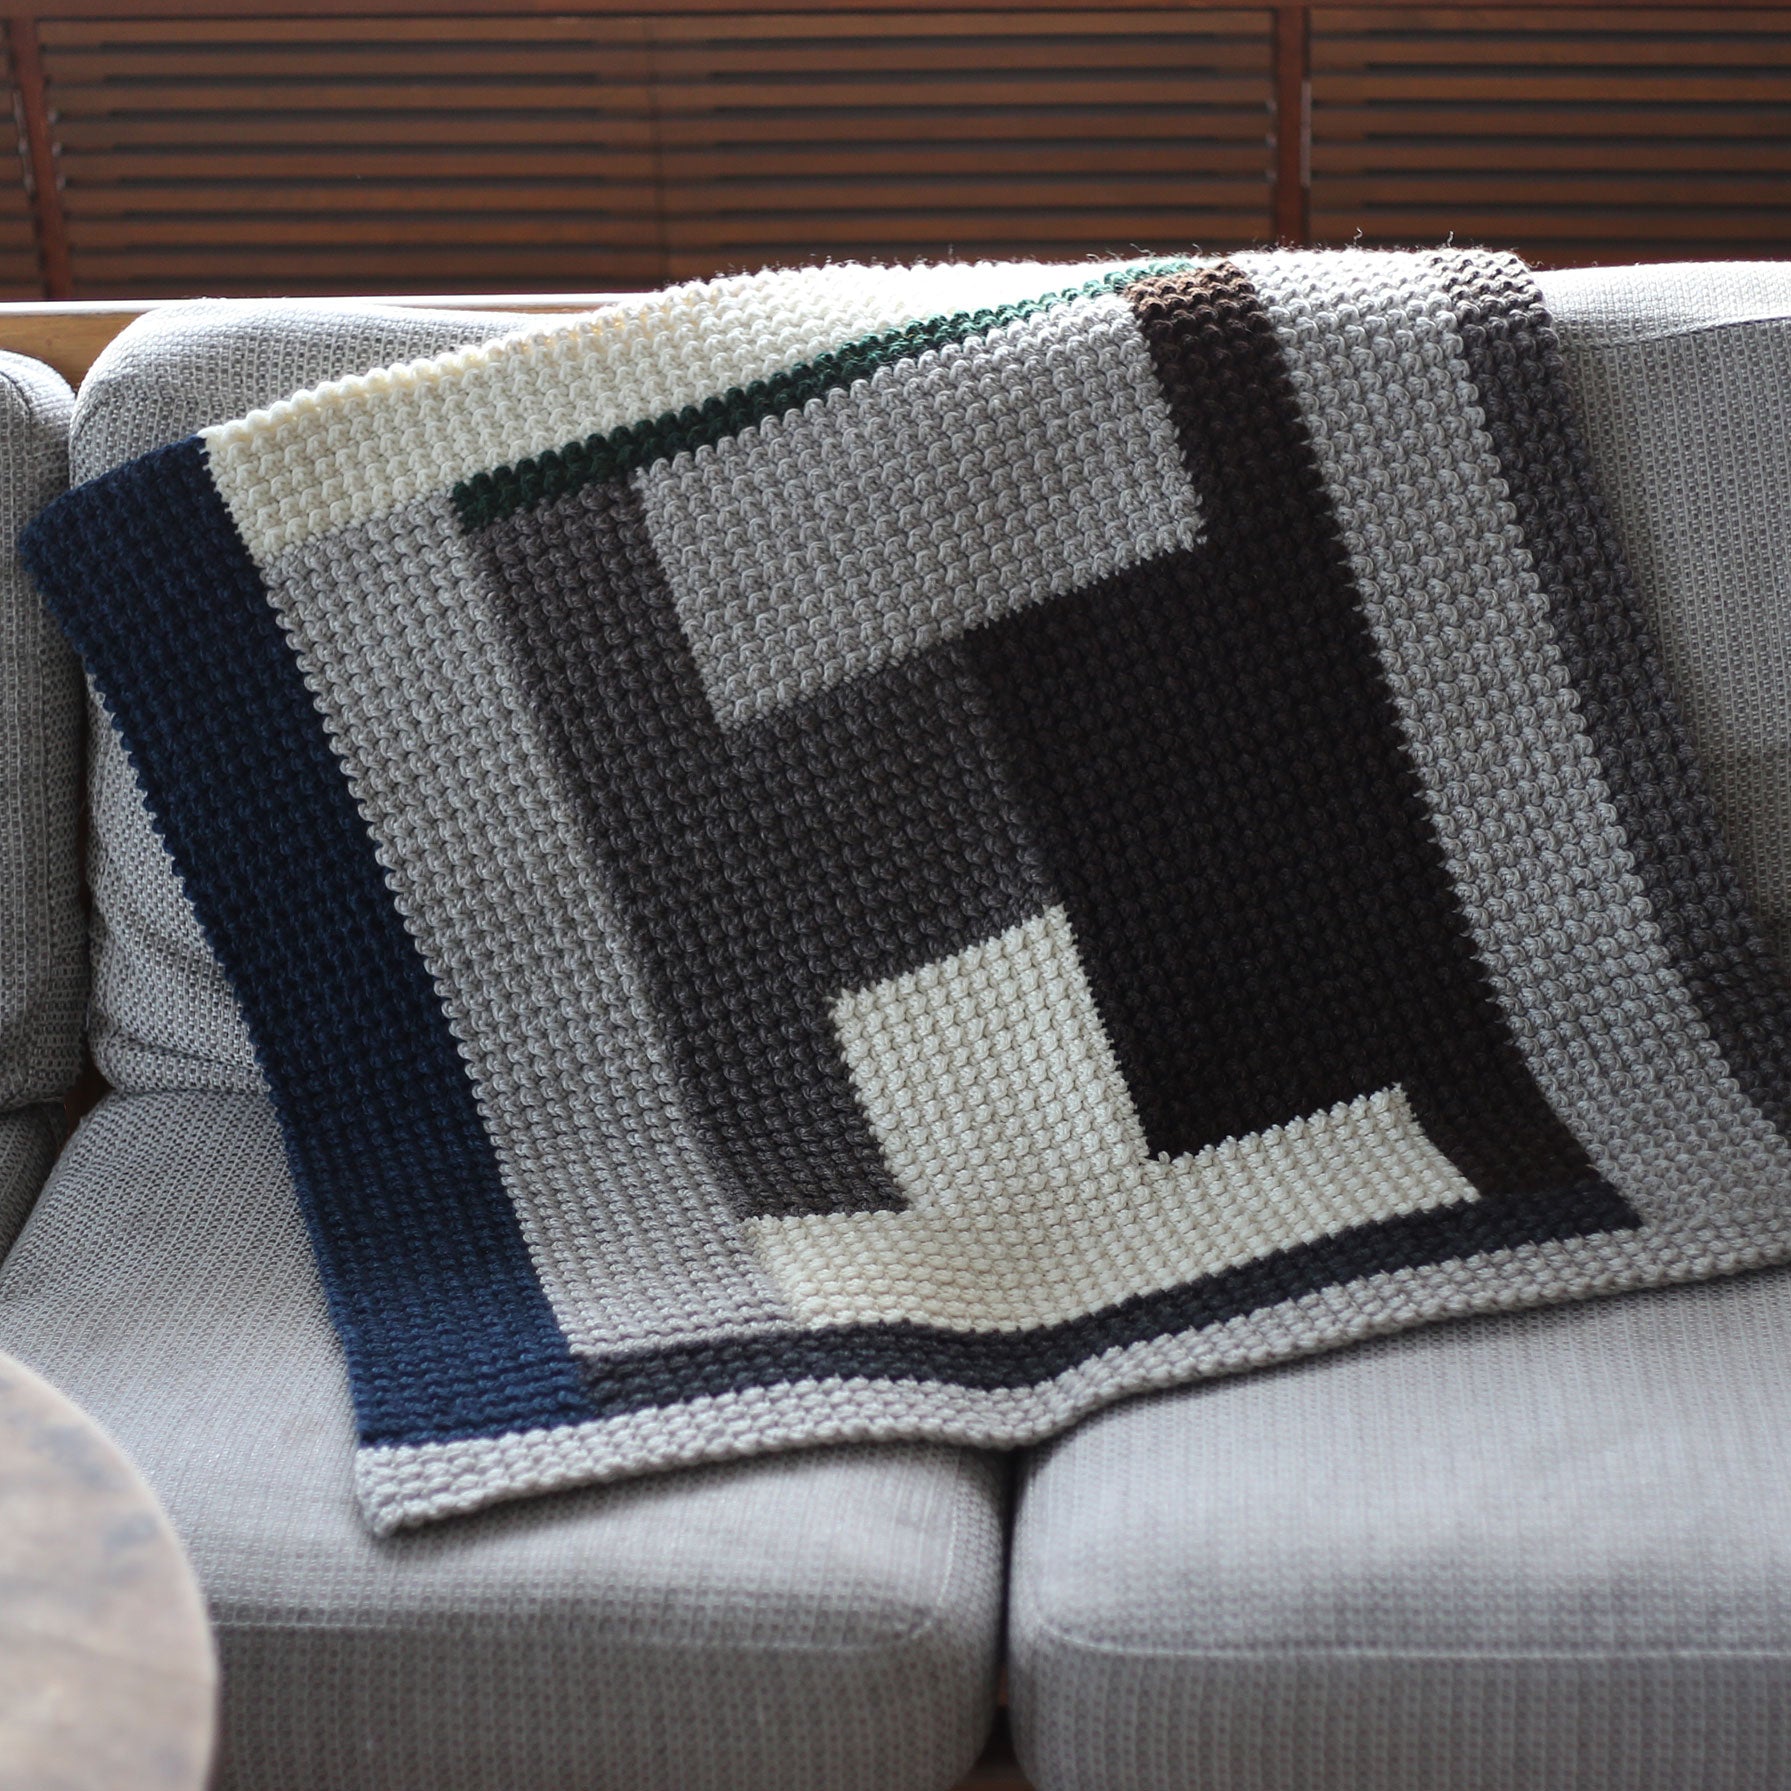 "Seamless Blanket" Crochet Pattern